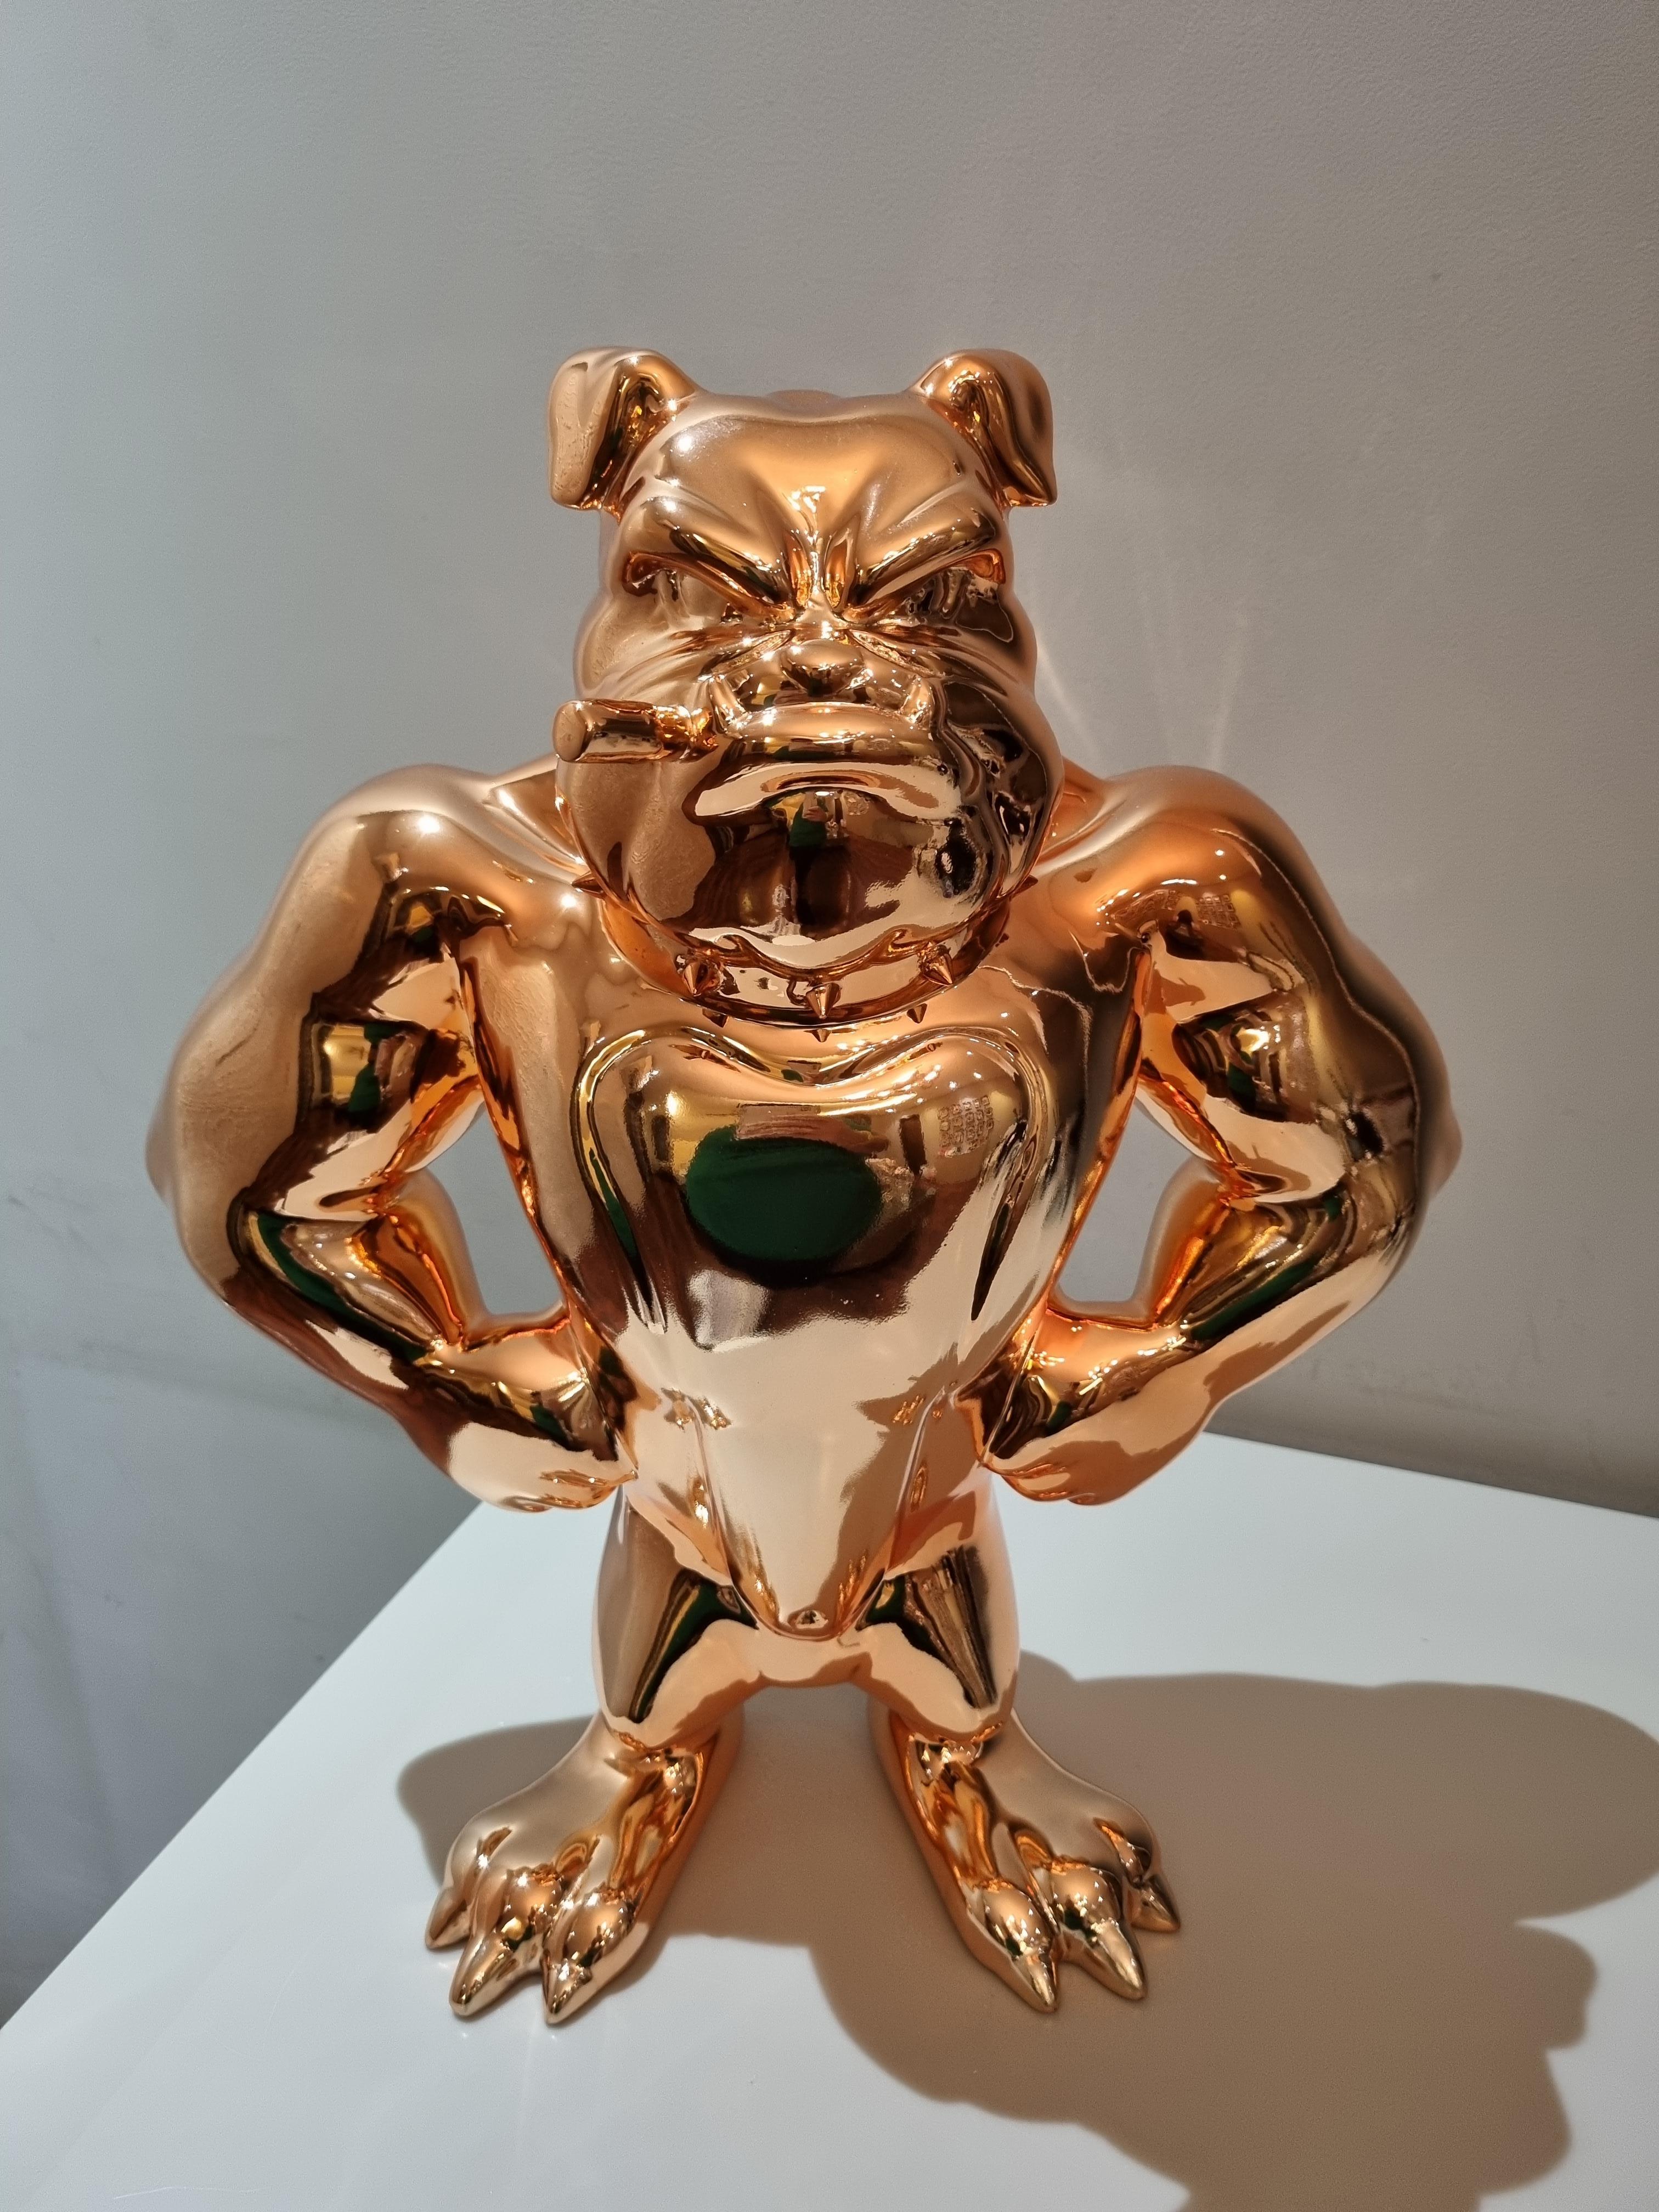 Boss Dog 2-original bulldog sculpture figure iconique-art contemporain-œuvre d'art